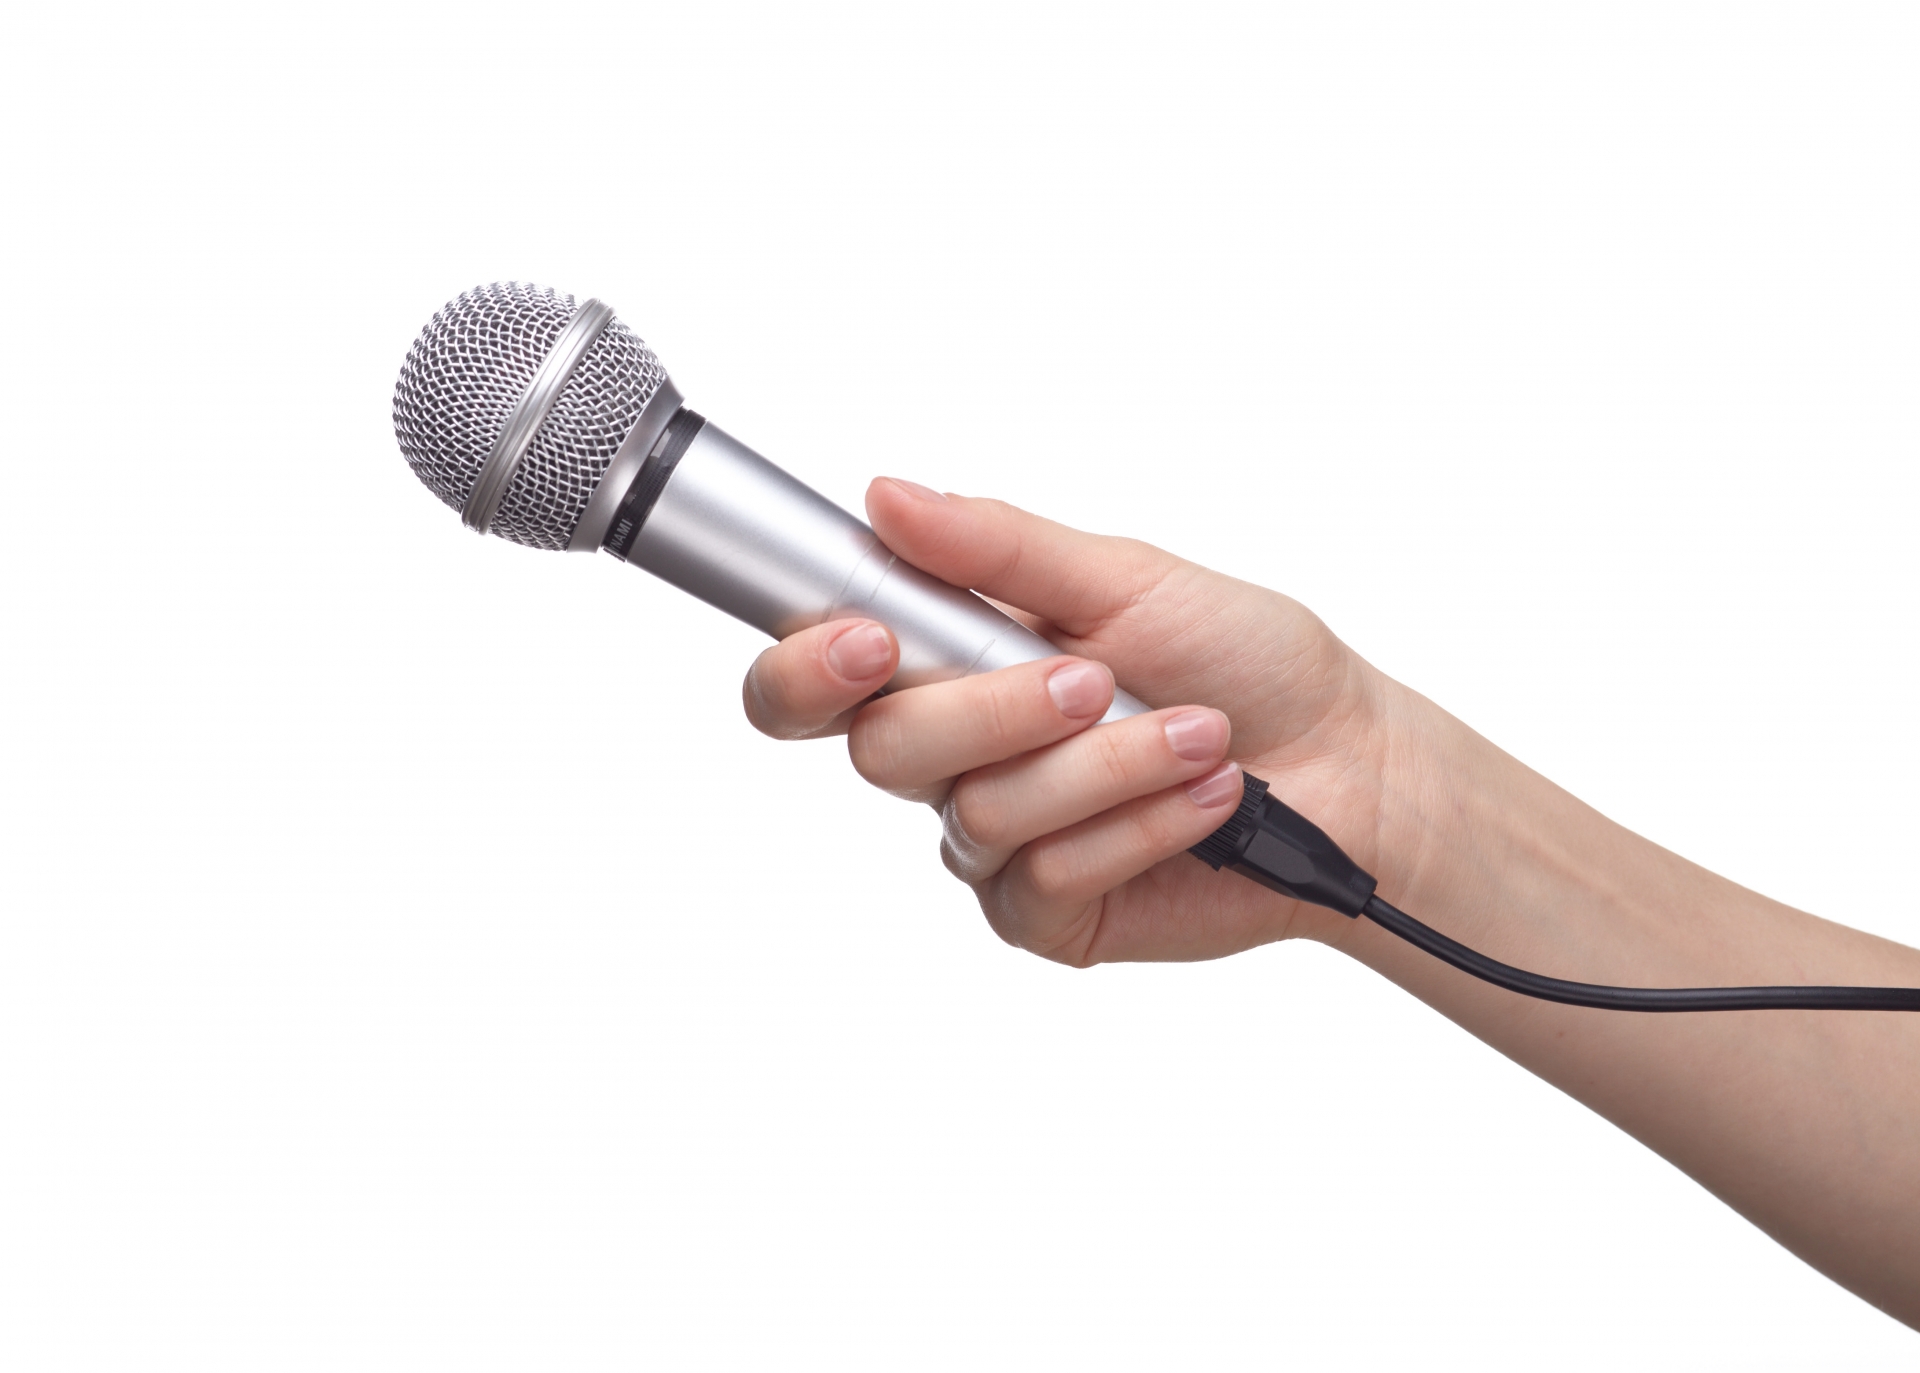 Гудит микрофон. Mic11 микрофон. Микрофон Kollar Mic. Рука с микрофоном. Провод для микрофона.